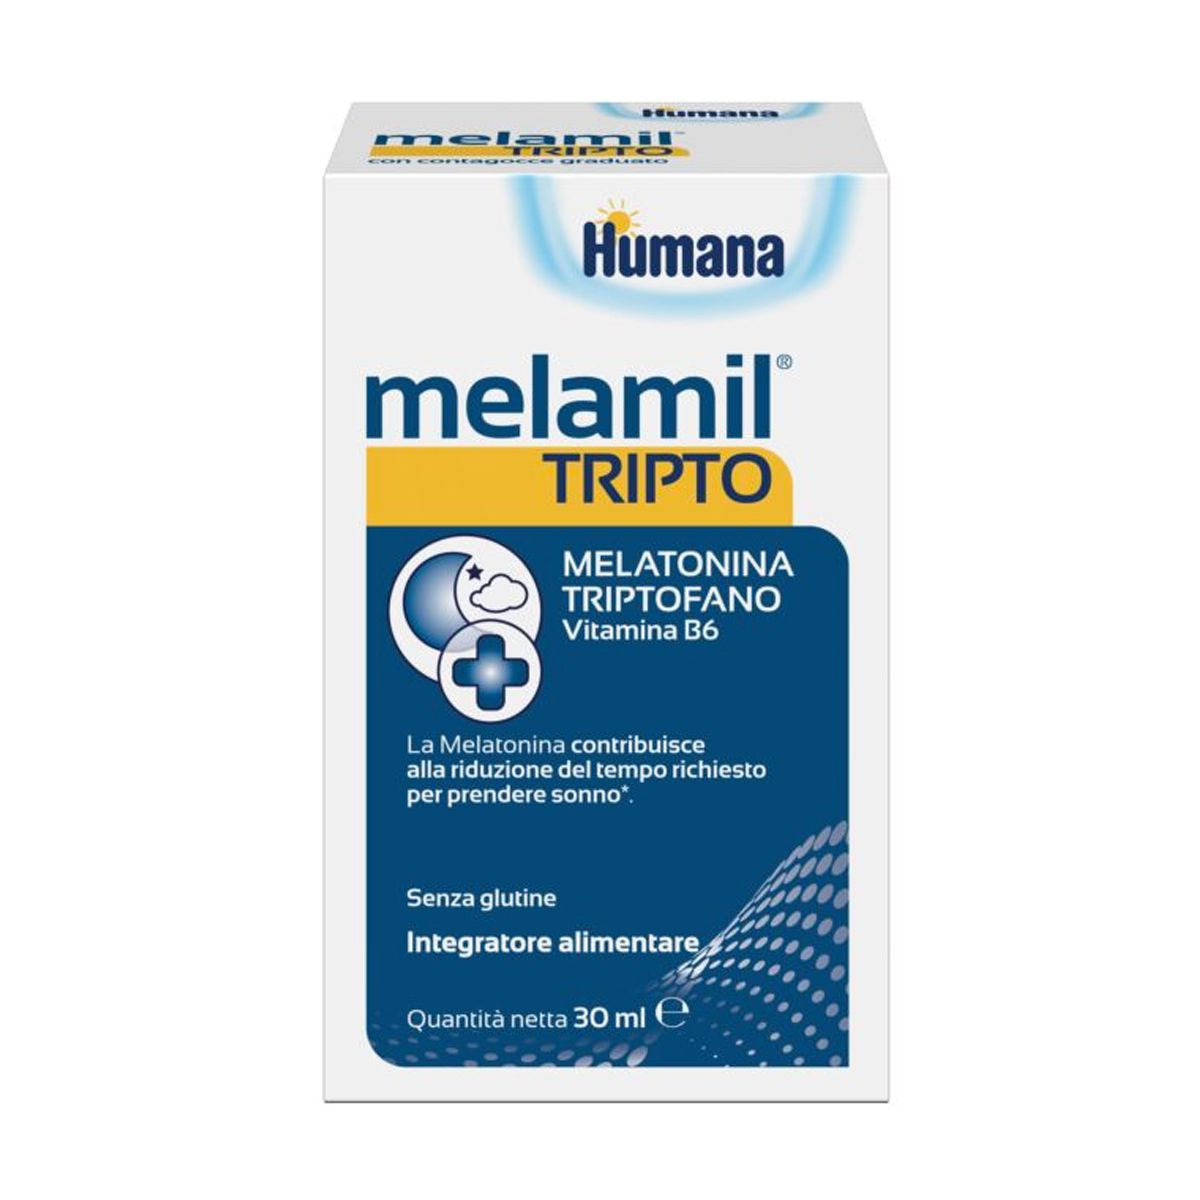 melamil tripto melatonina e vitamina b6 gocce 30ml